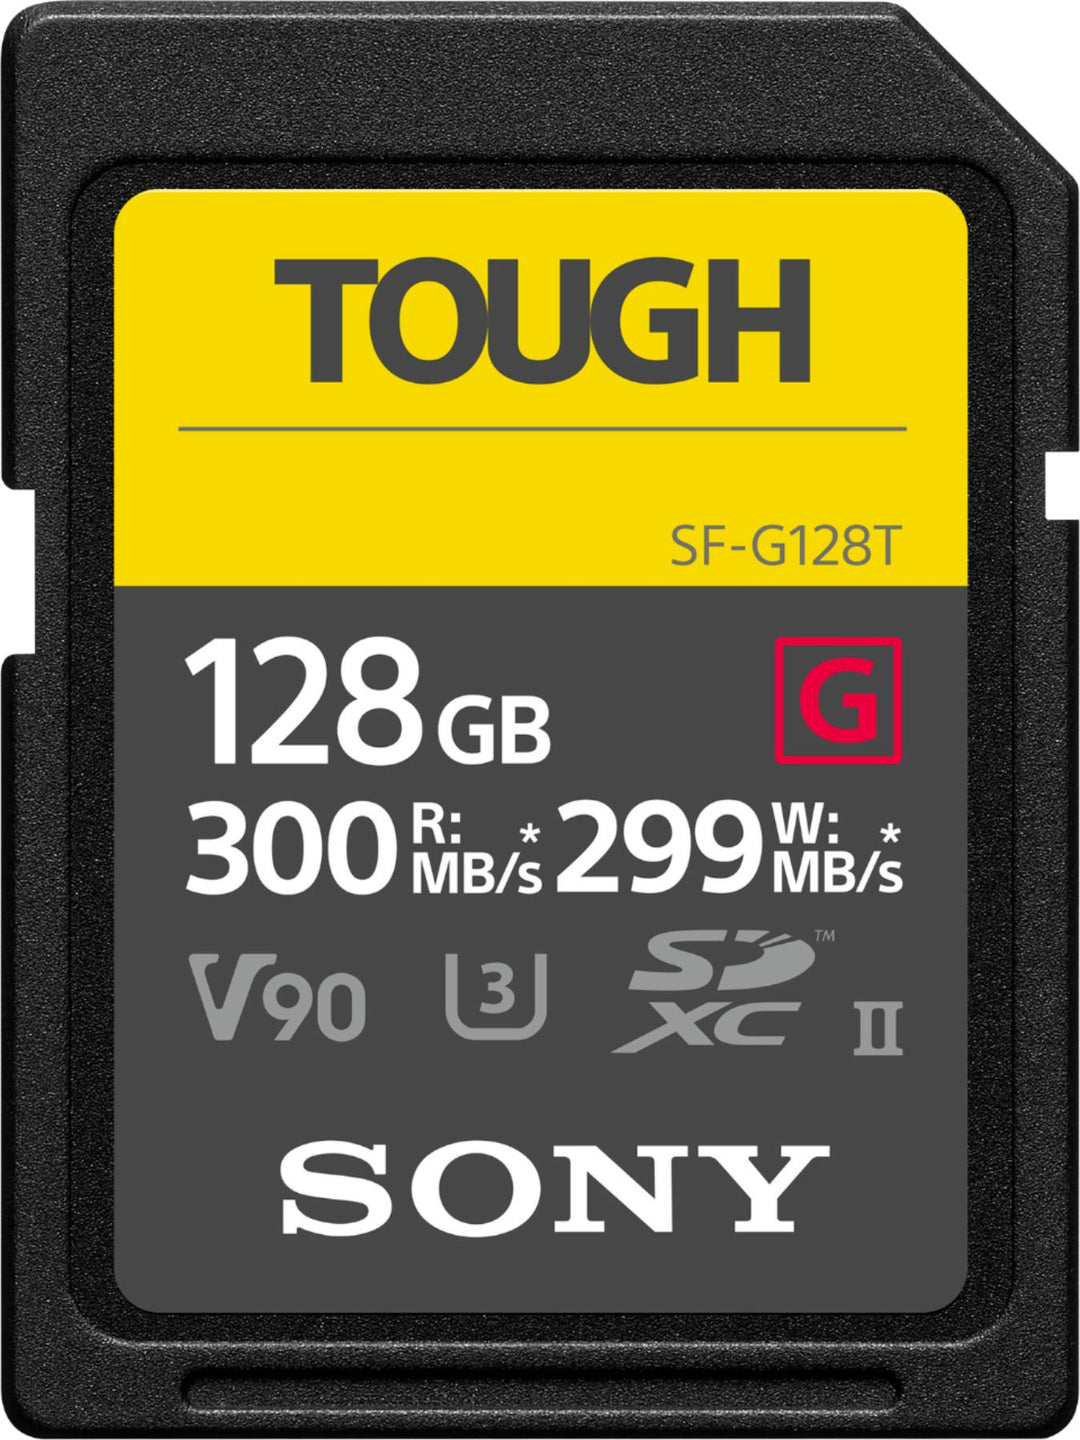 Sony - TOUGH G Series - 128GB SDXC UHS-II Memory Card_0